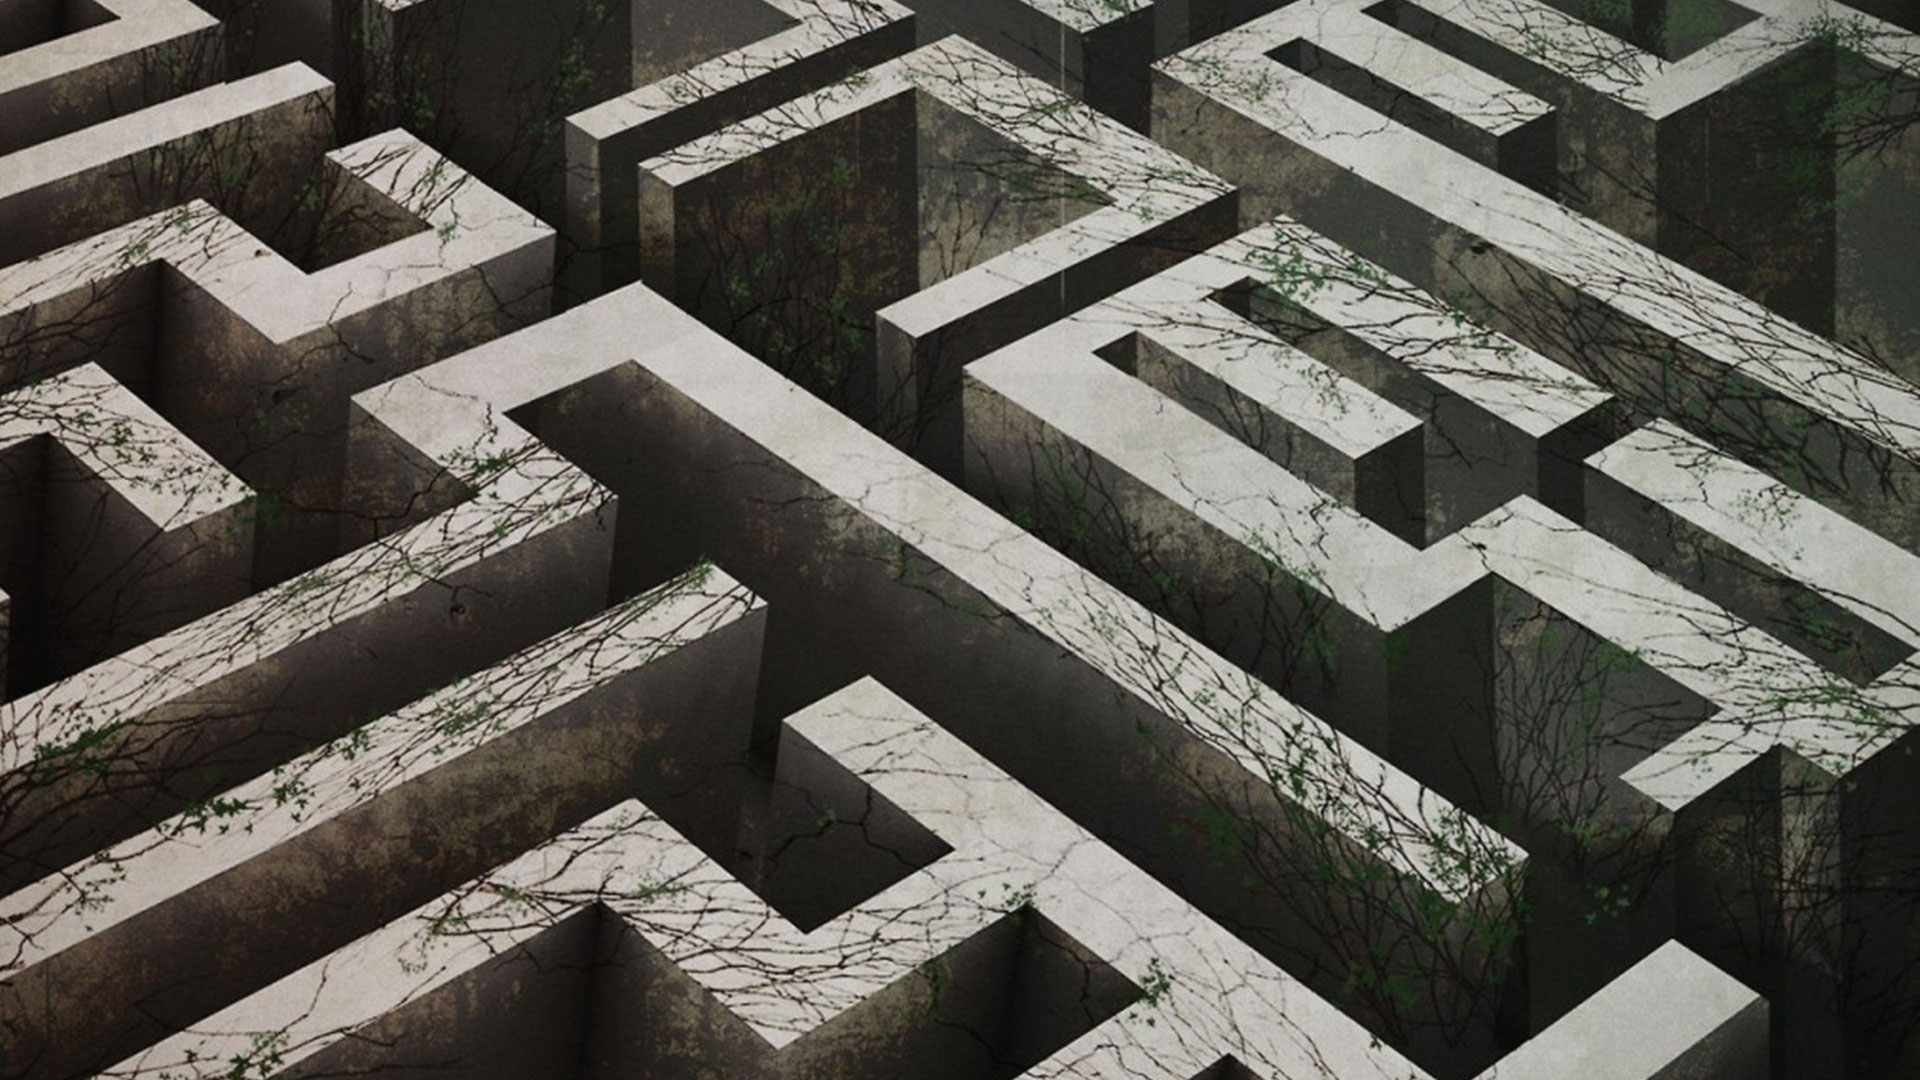 Movie The Maze Runner HD Wallpaper | Background Image